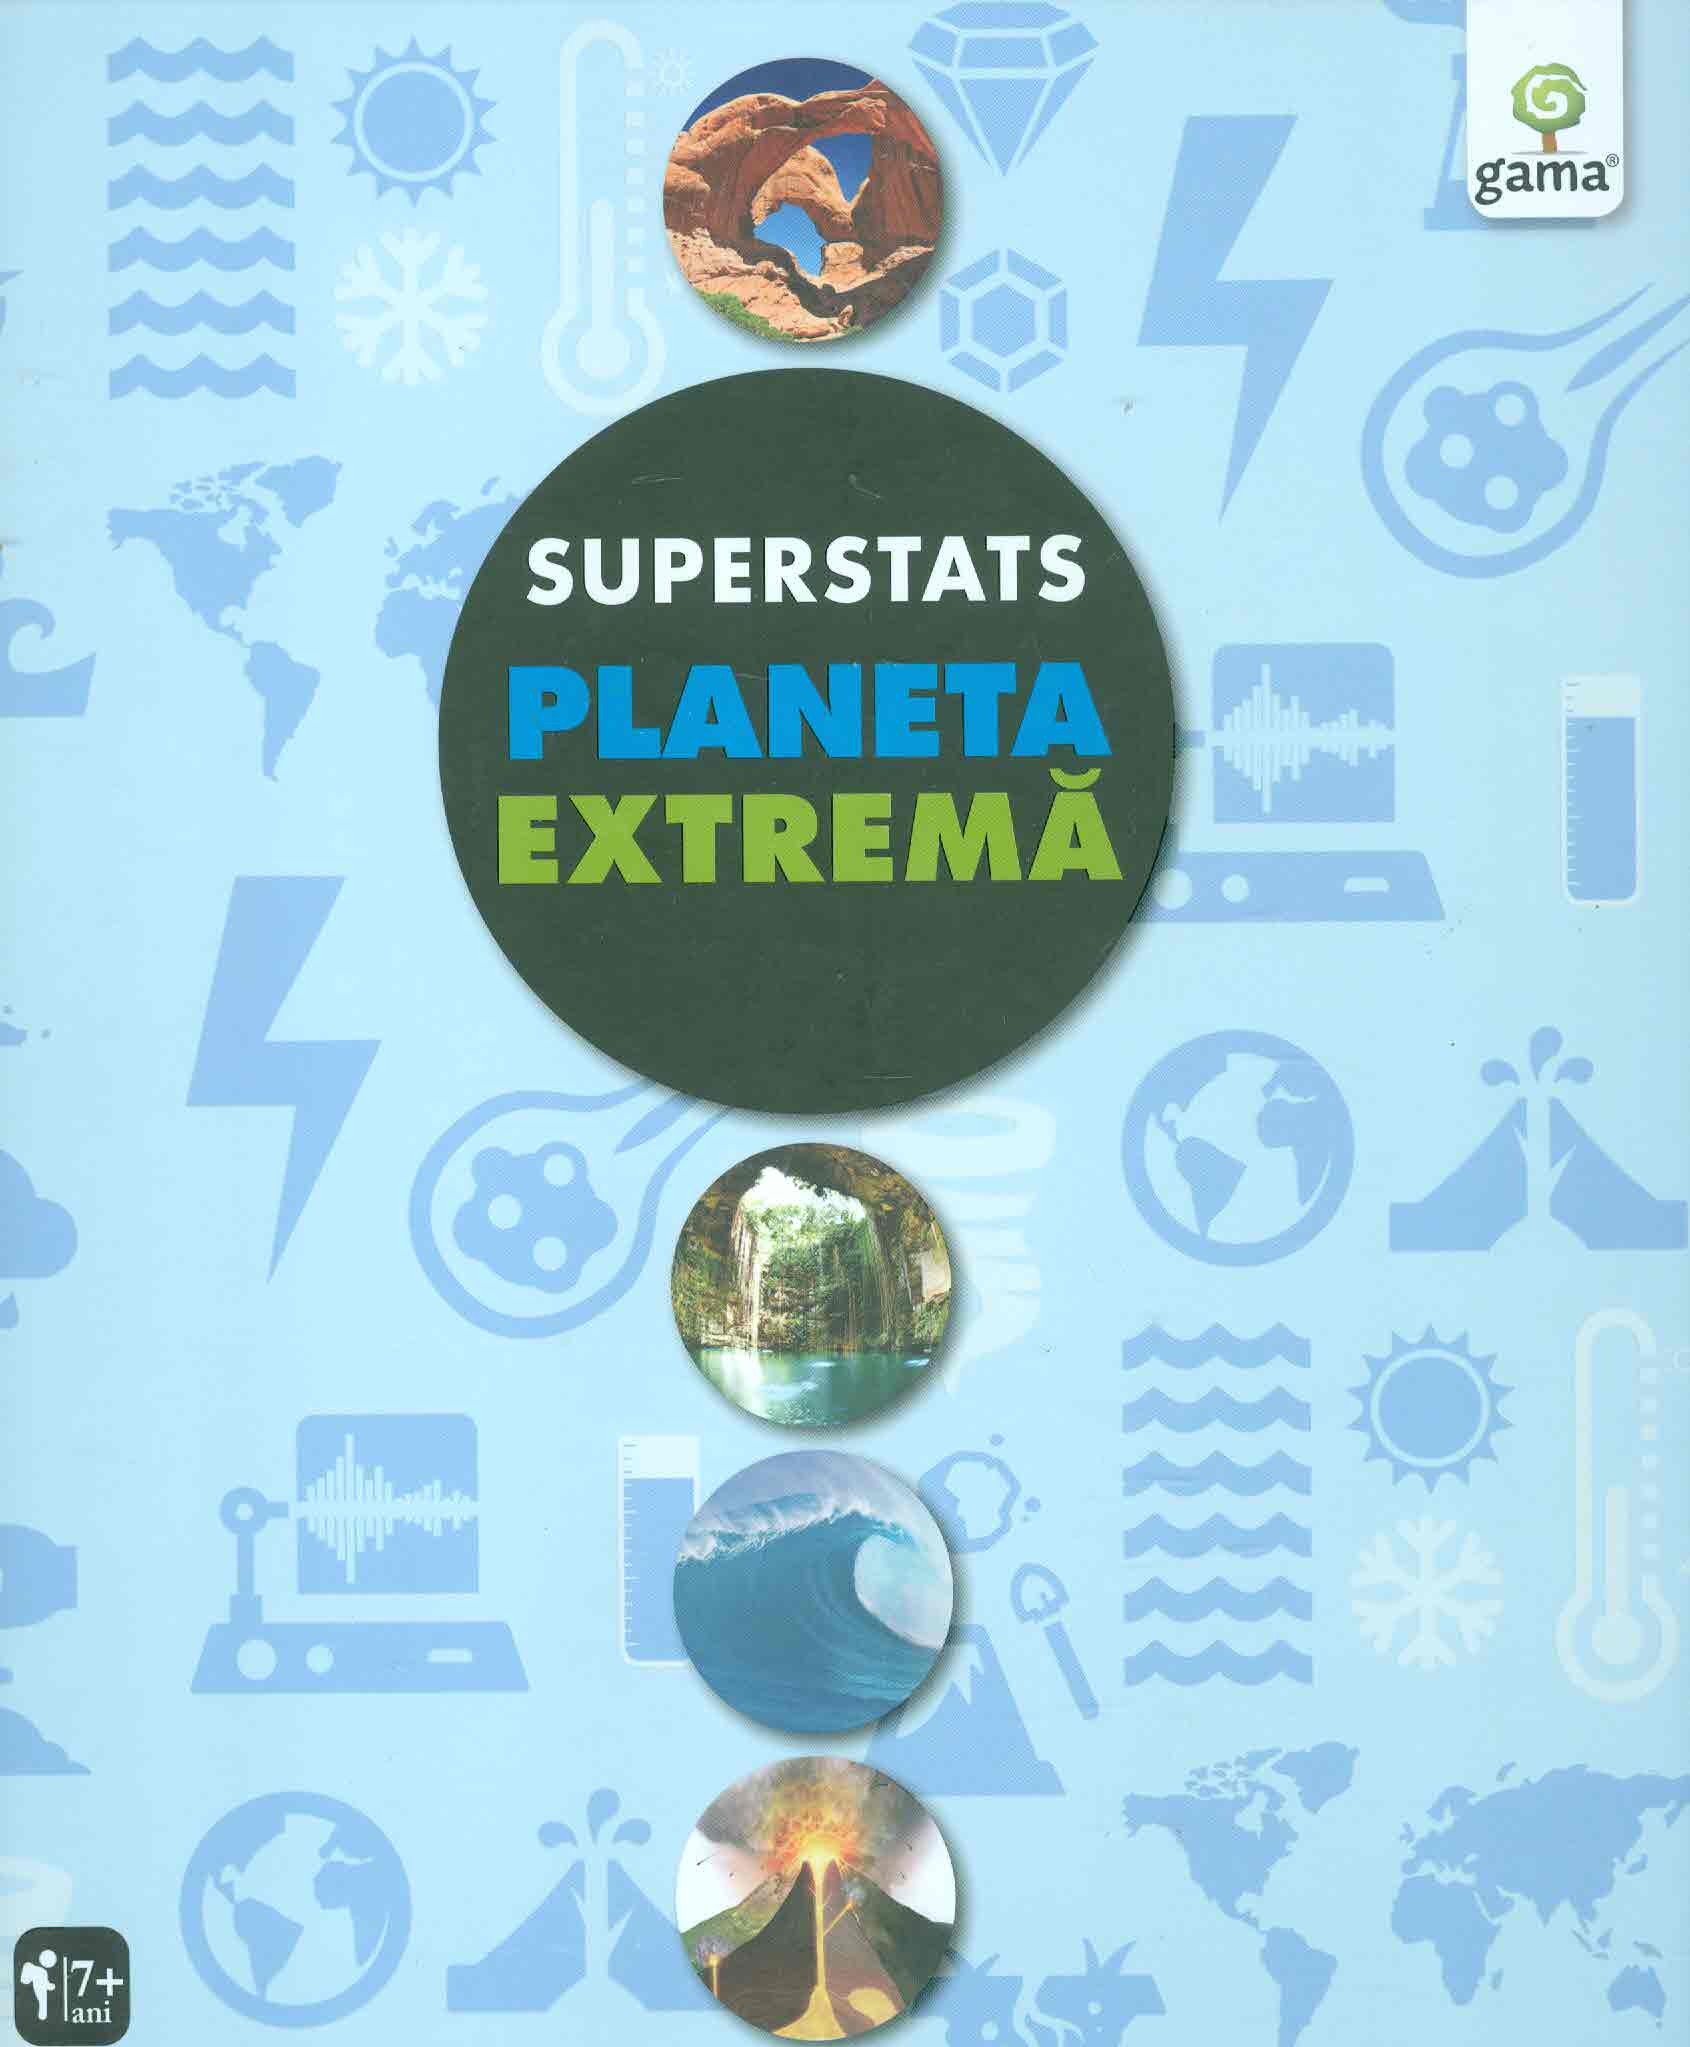 Planeta extrema - Superstats